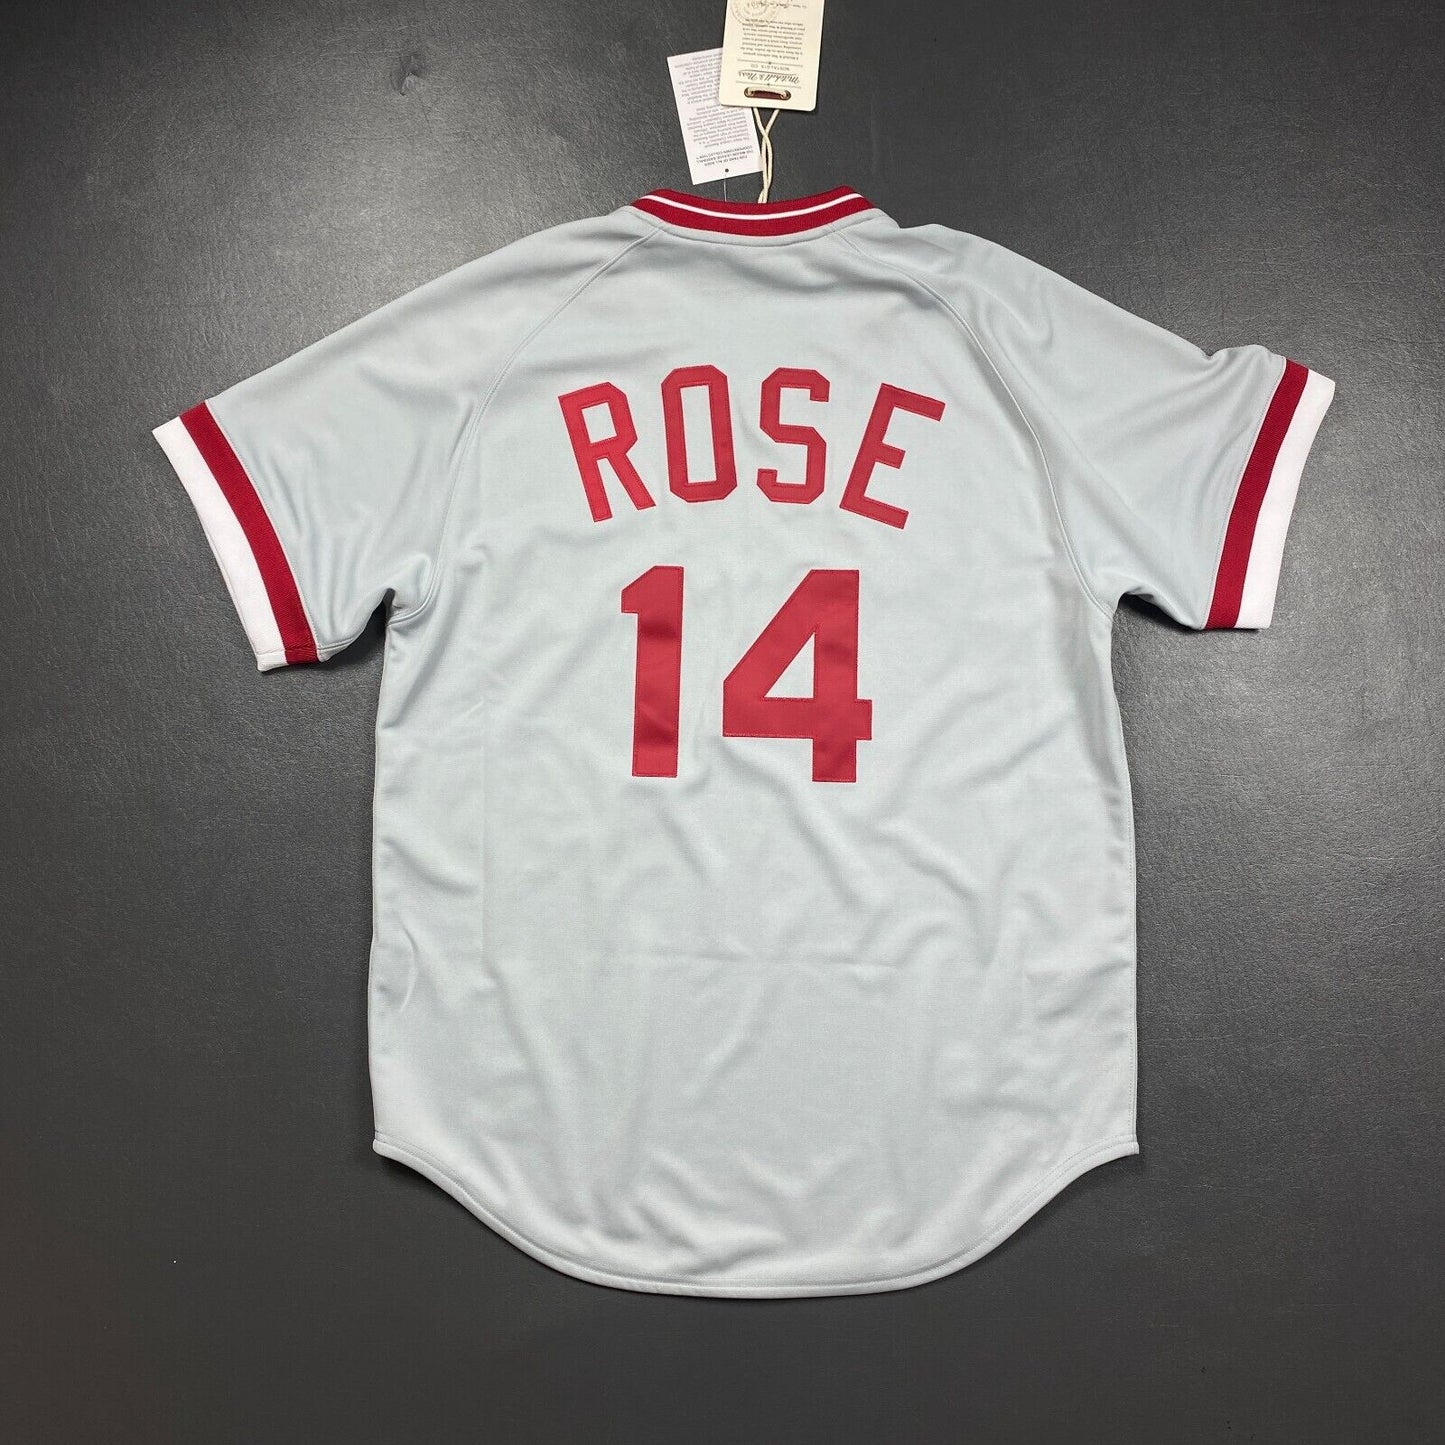 100% Authentic Pete Rose Mitchell Ness 1975 Cincinnati Reds Jersey Size 44 L